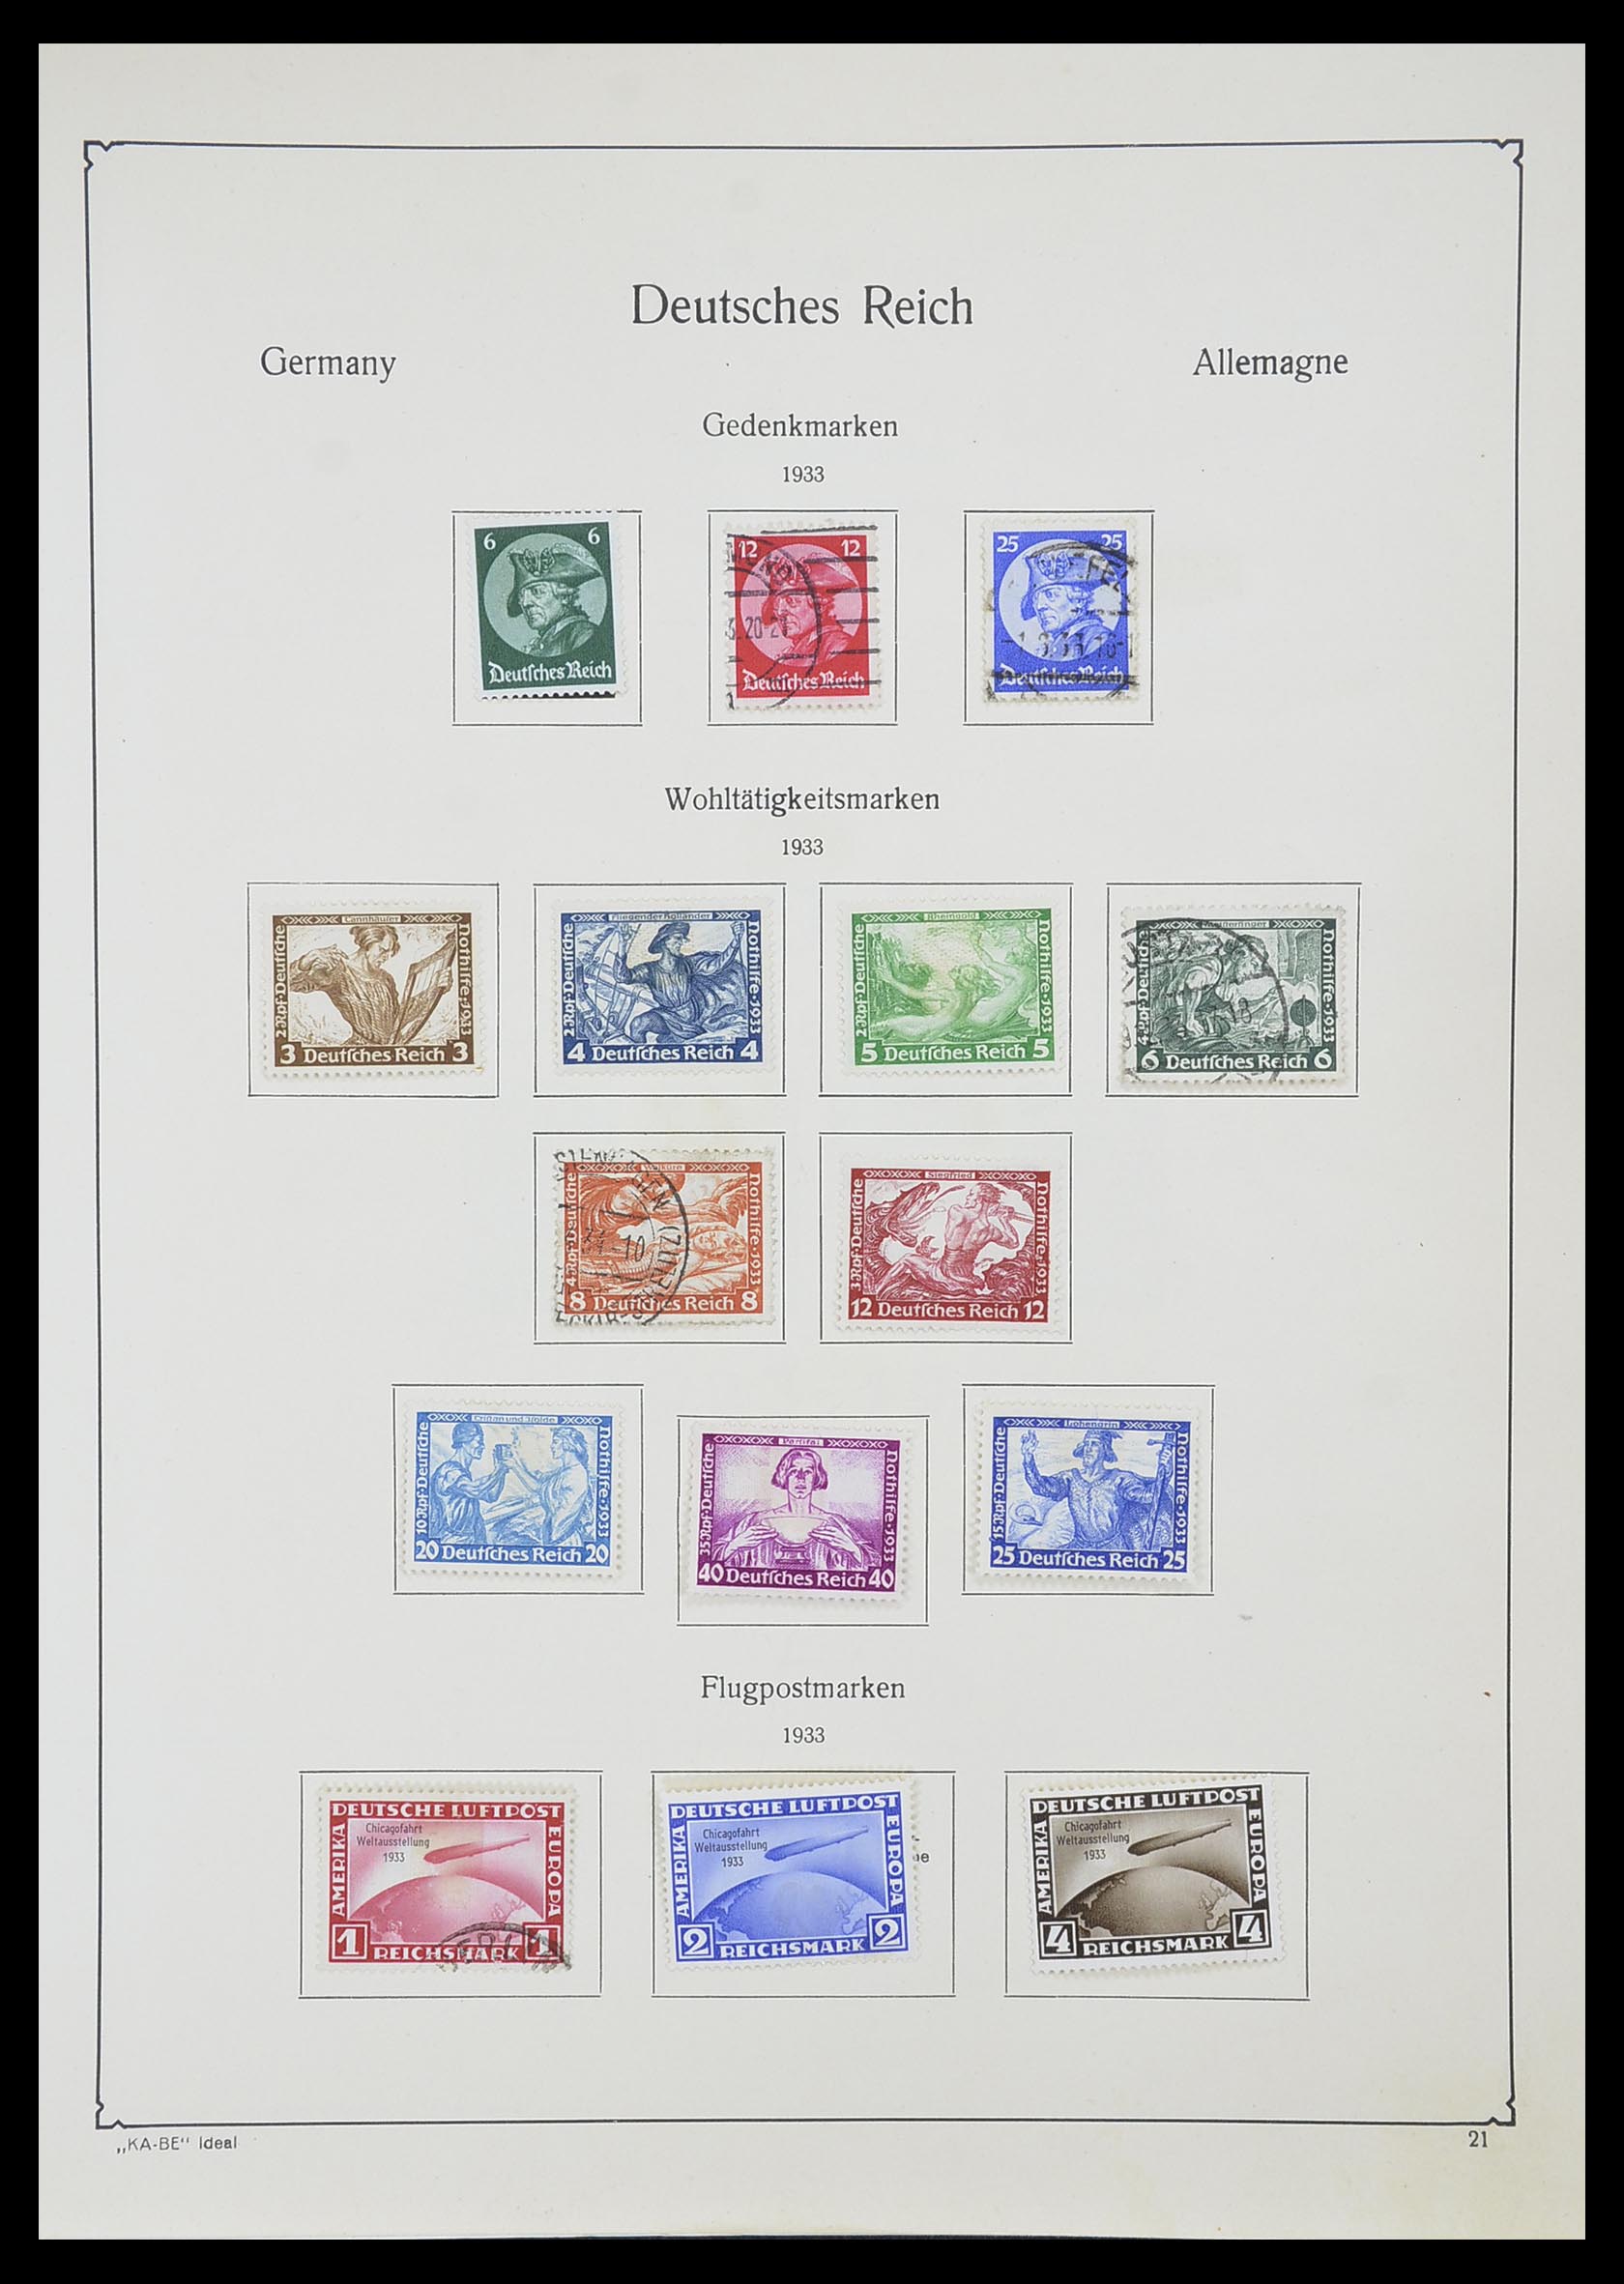 33359 028 - Stamp collection 33359 German Reich 1872-1945.